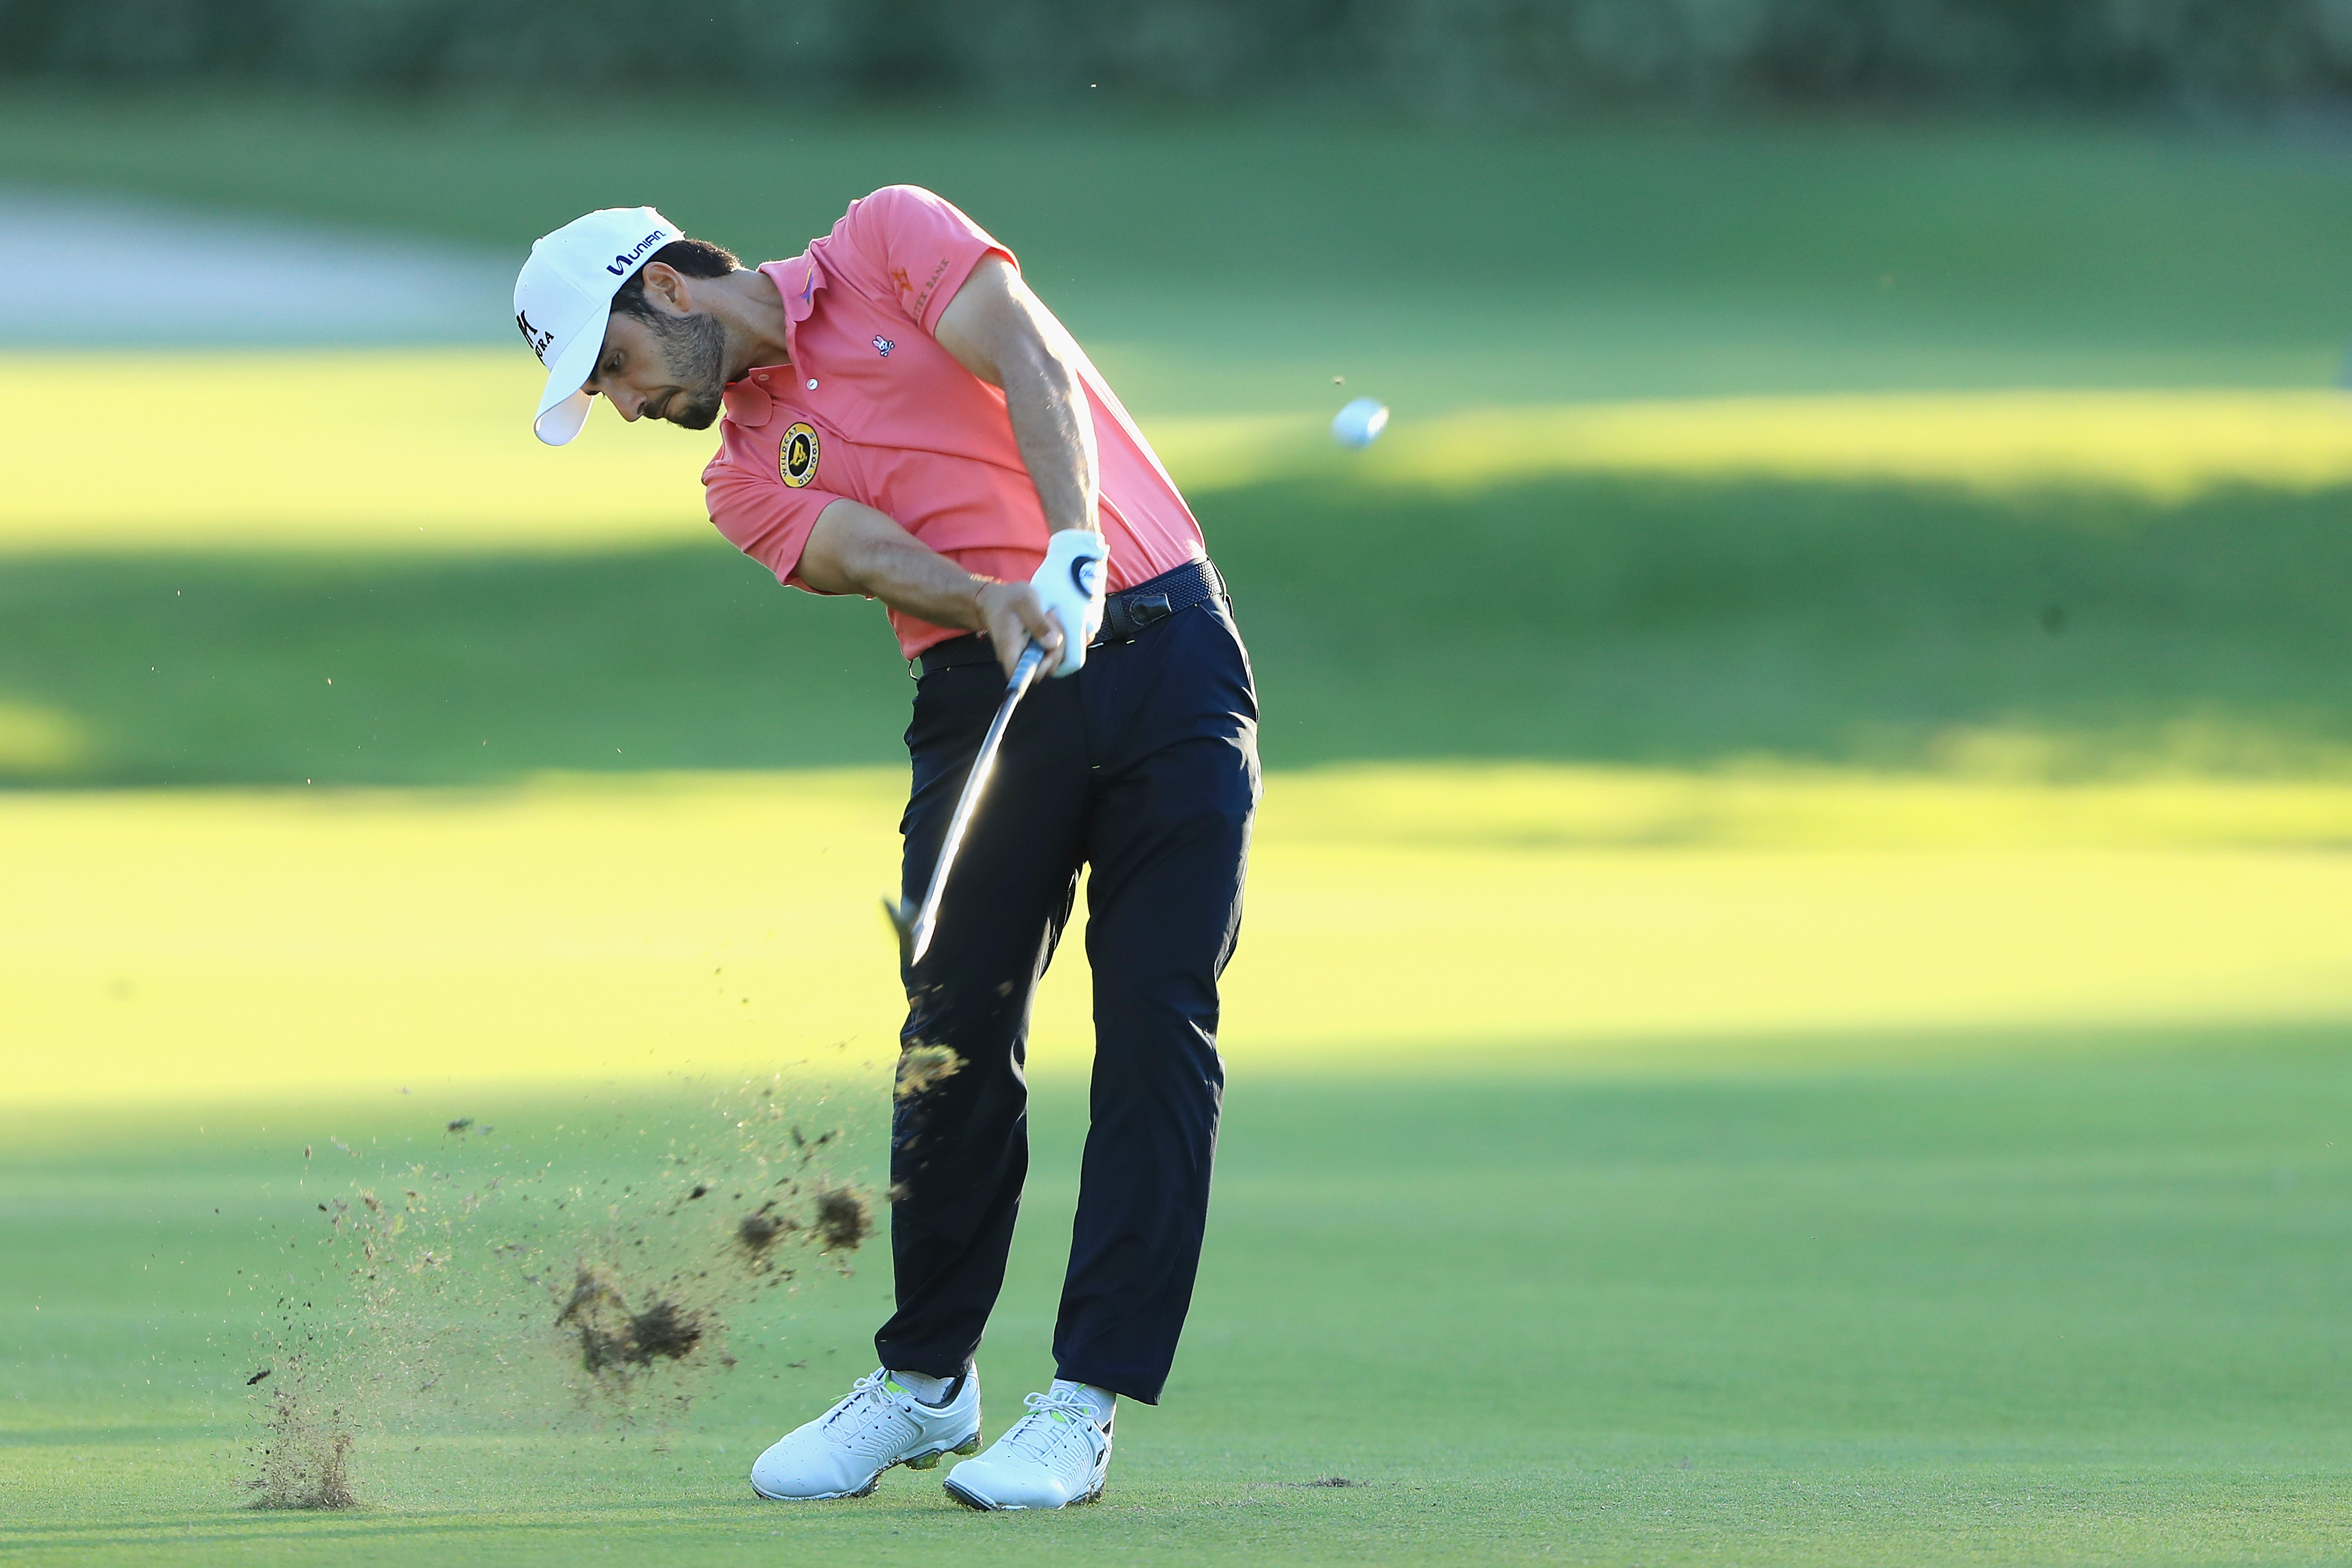 Miura Golf signs Abraham Ancer as its first PGA Tour ambassador